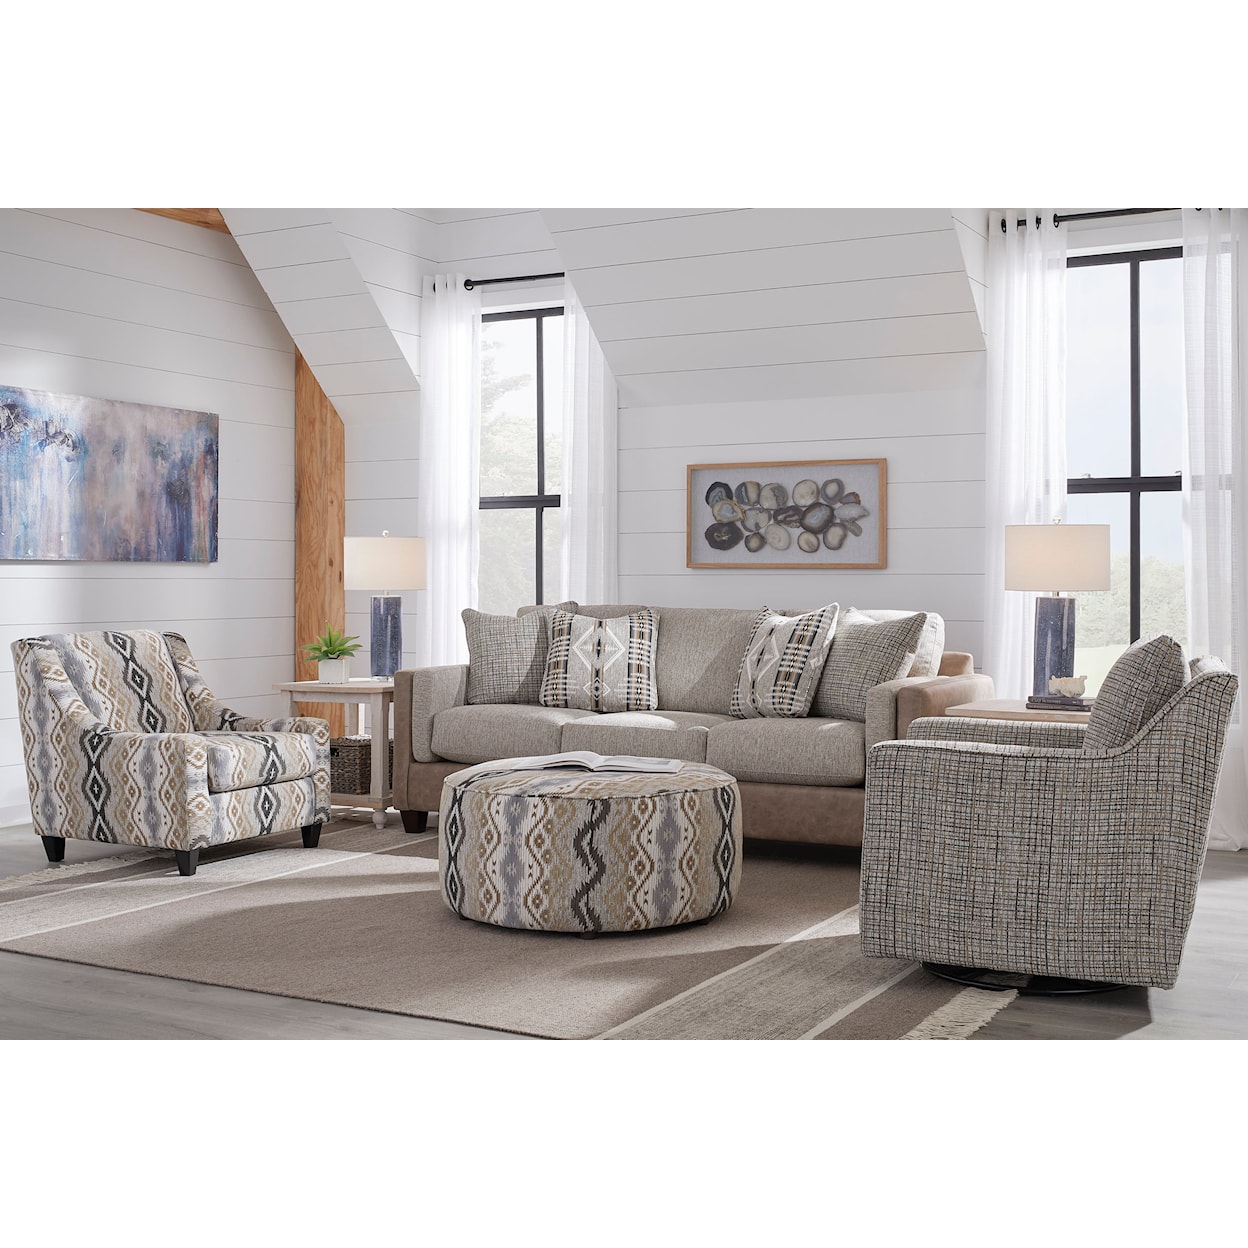 Fusion Furniture 5005 PASSION VINTAGE WILD THING DAPPLE Living Room Set